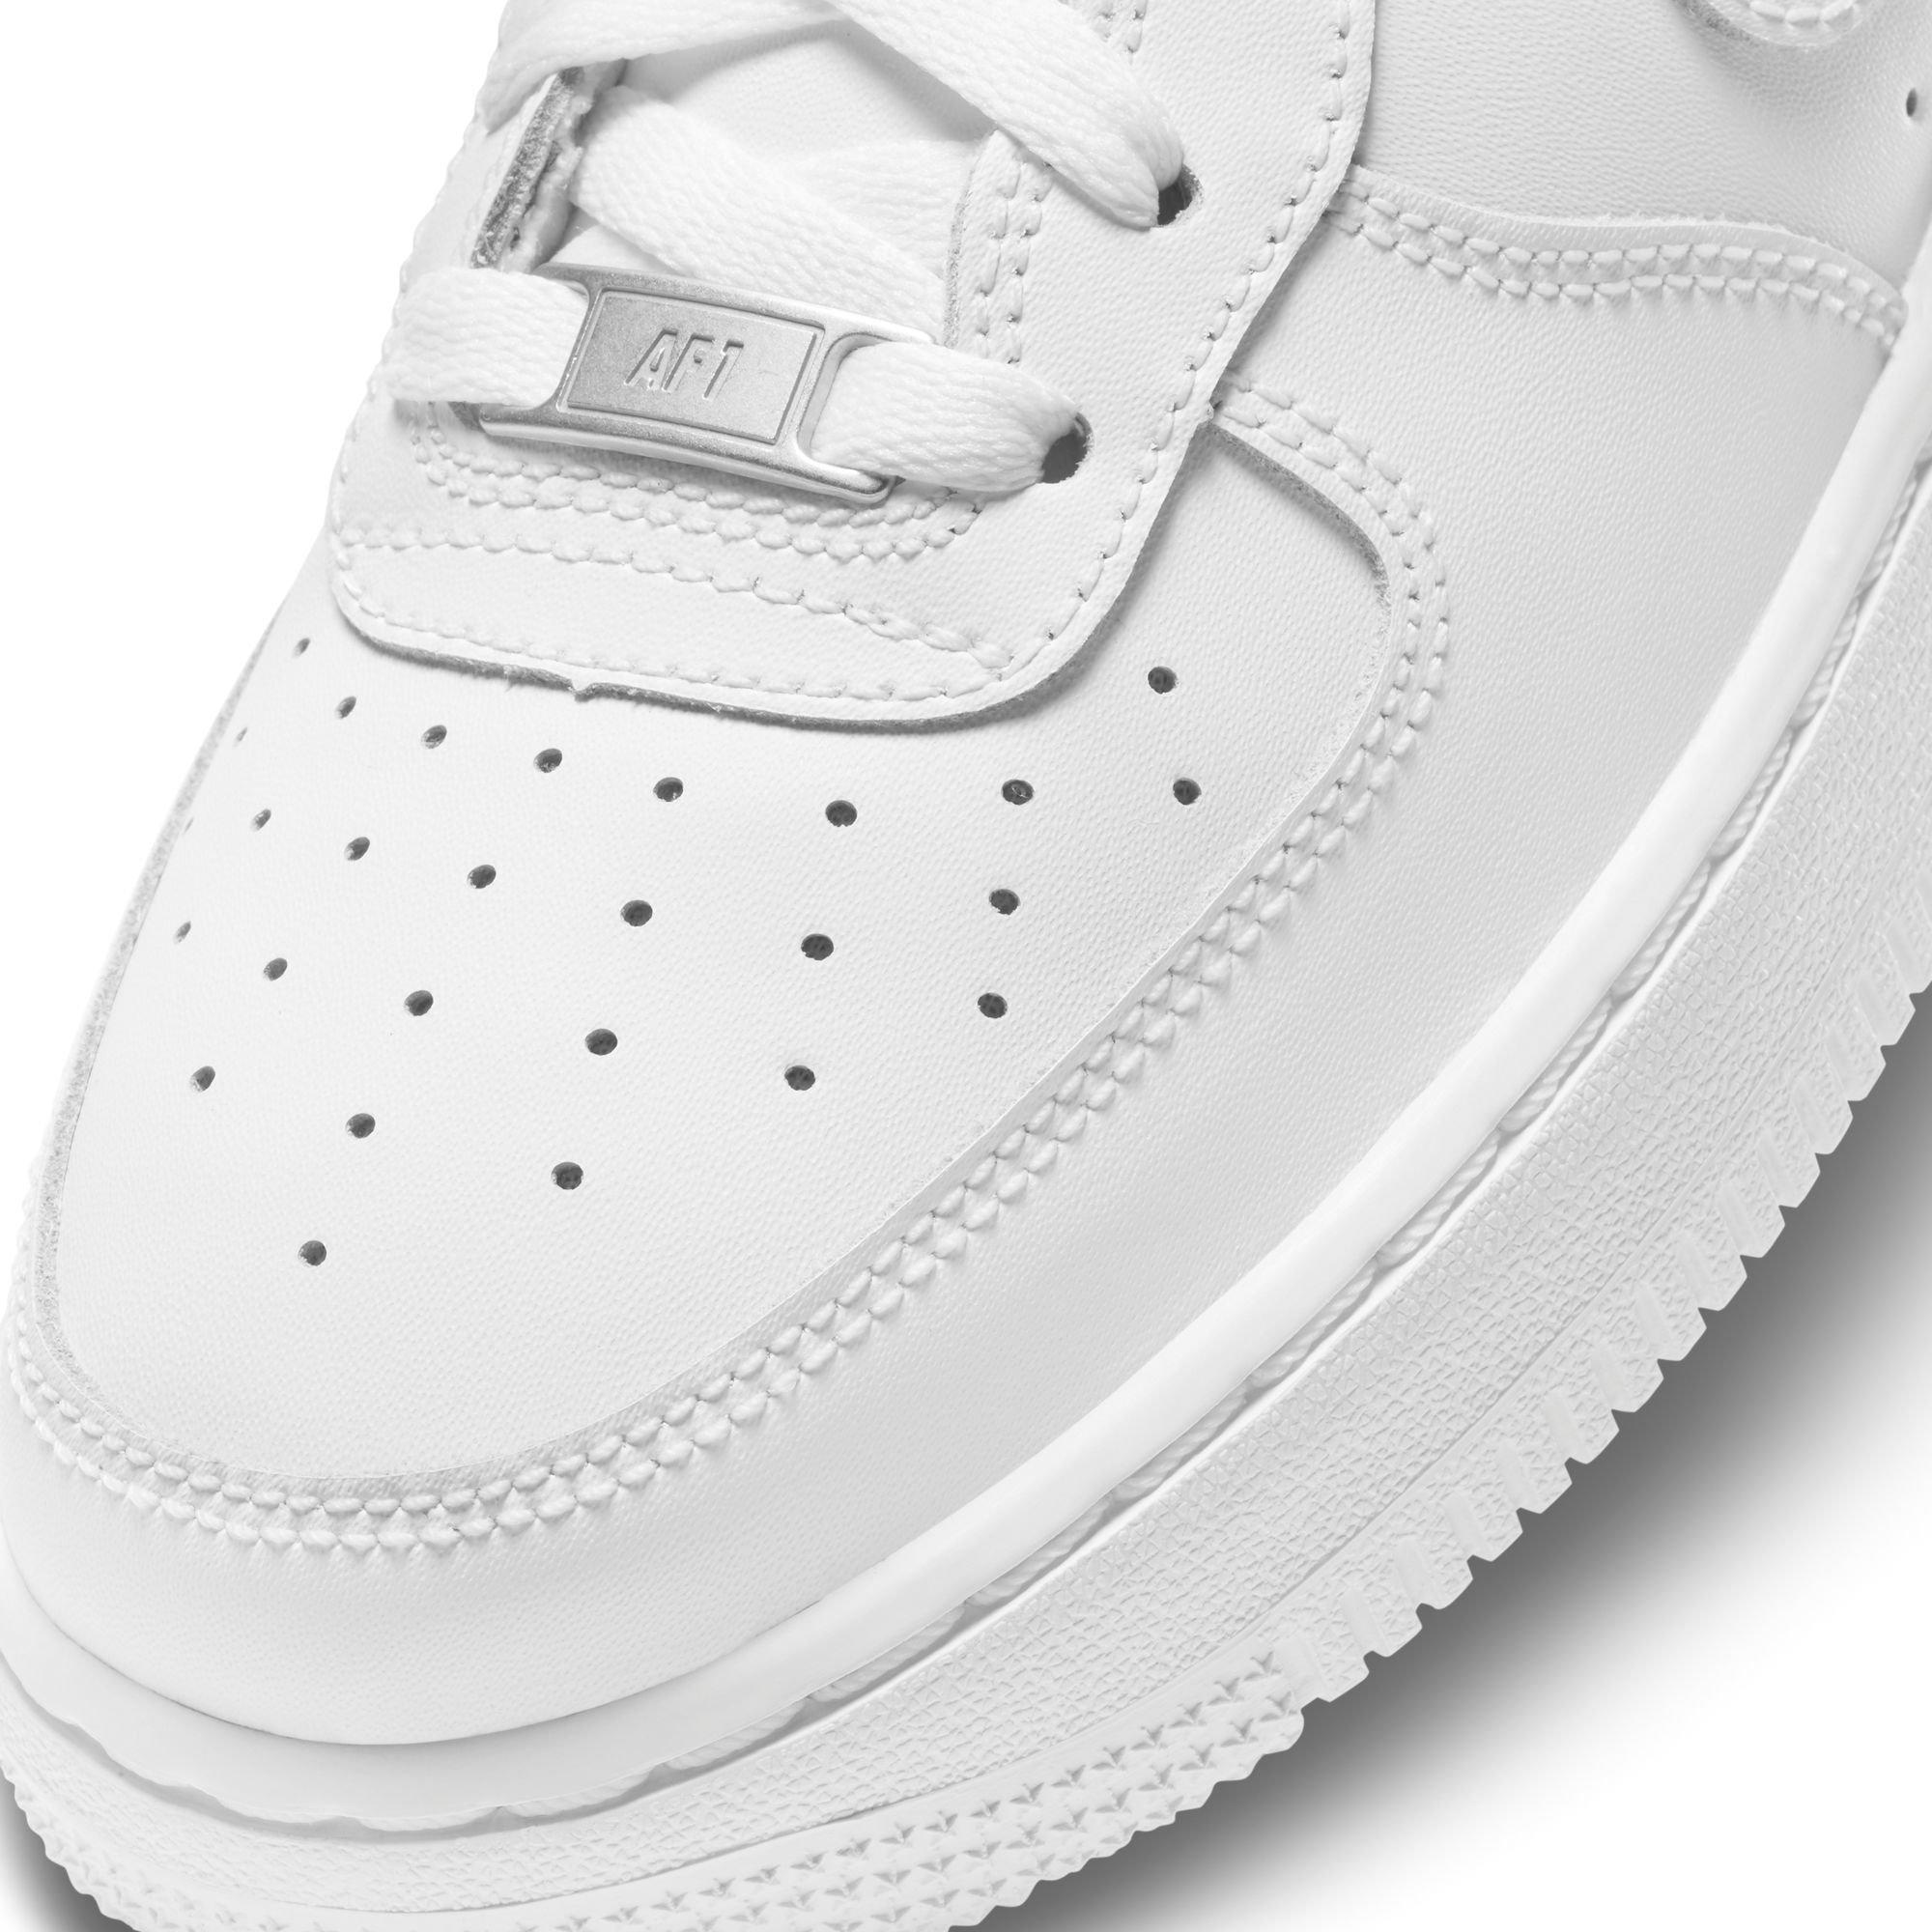 Nike Air Force 1 LV8 White/Safety Orange/Washed Teal Grade School Boys'  Shoe - Hibbett